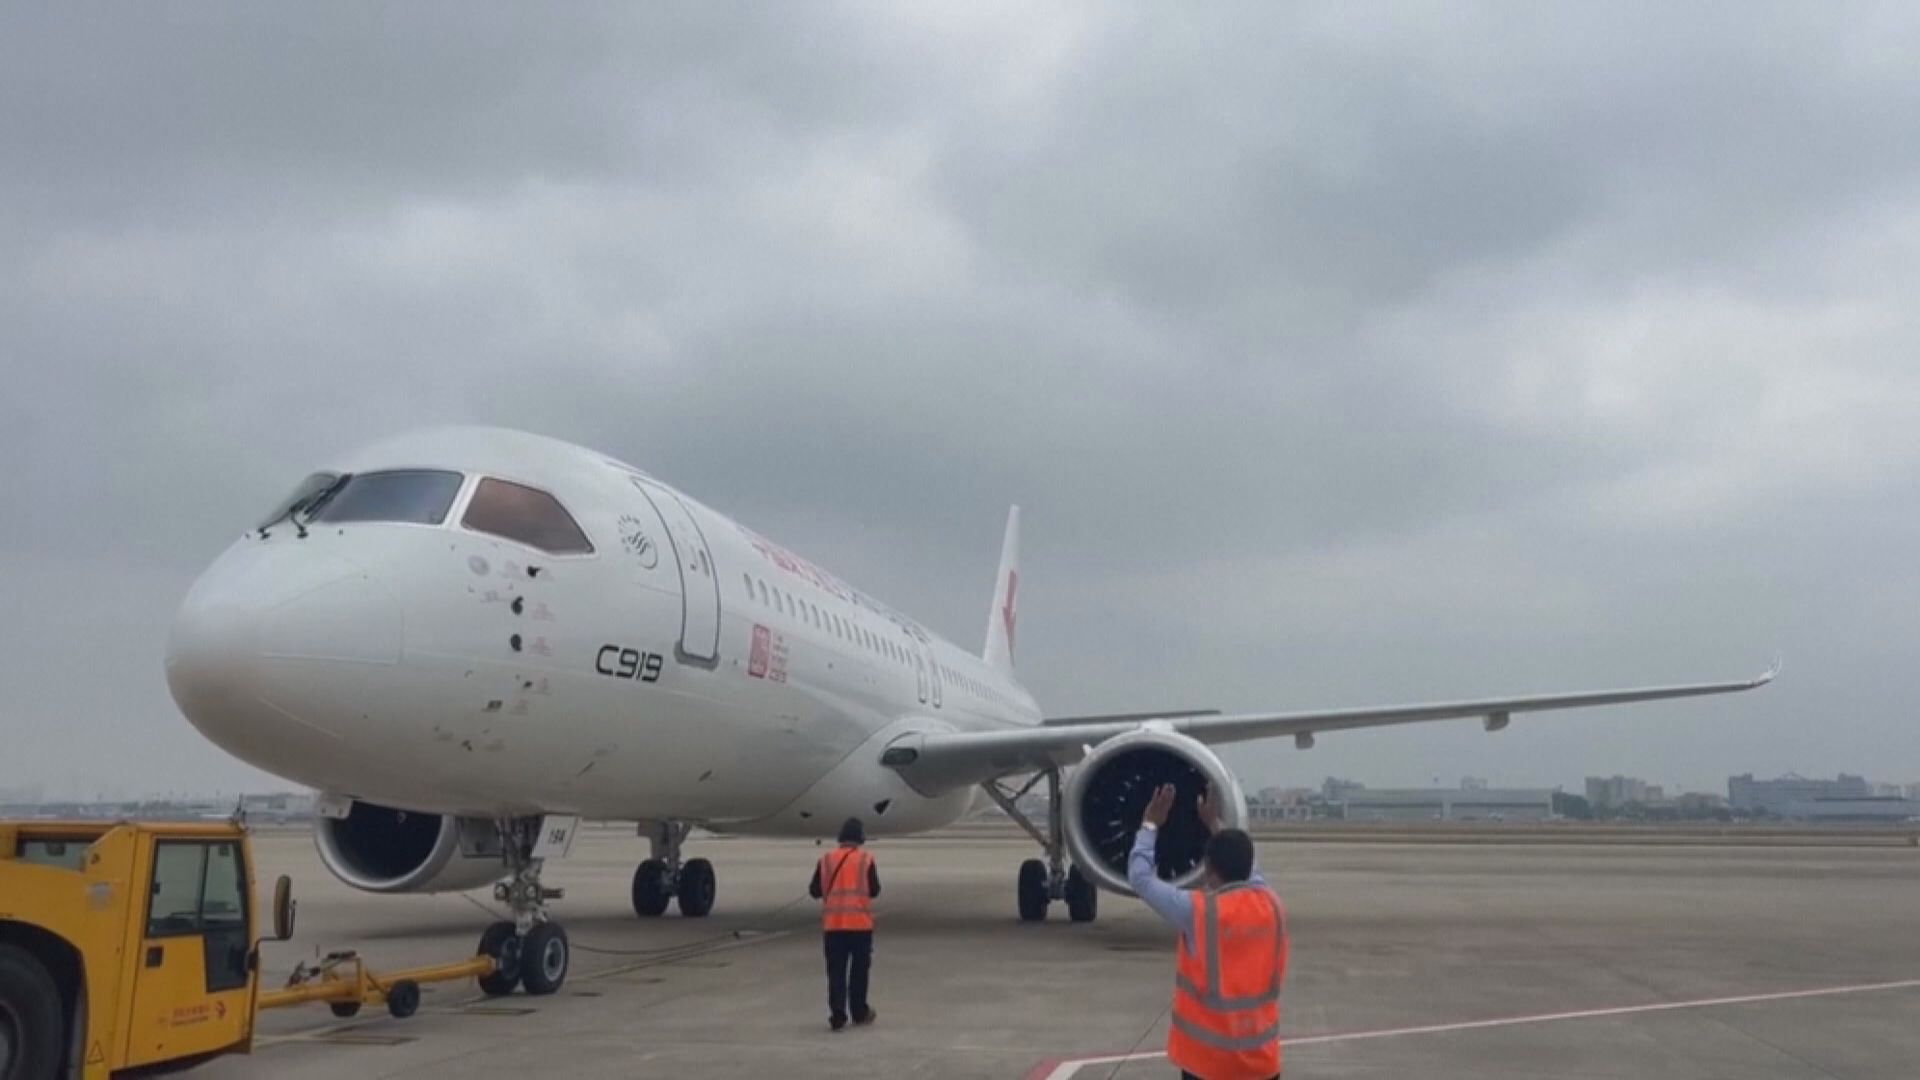 C-919國產客機投入來往上海廣州新航線